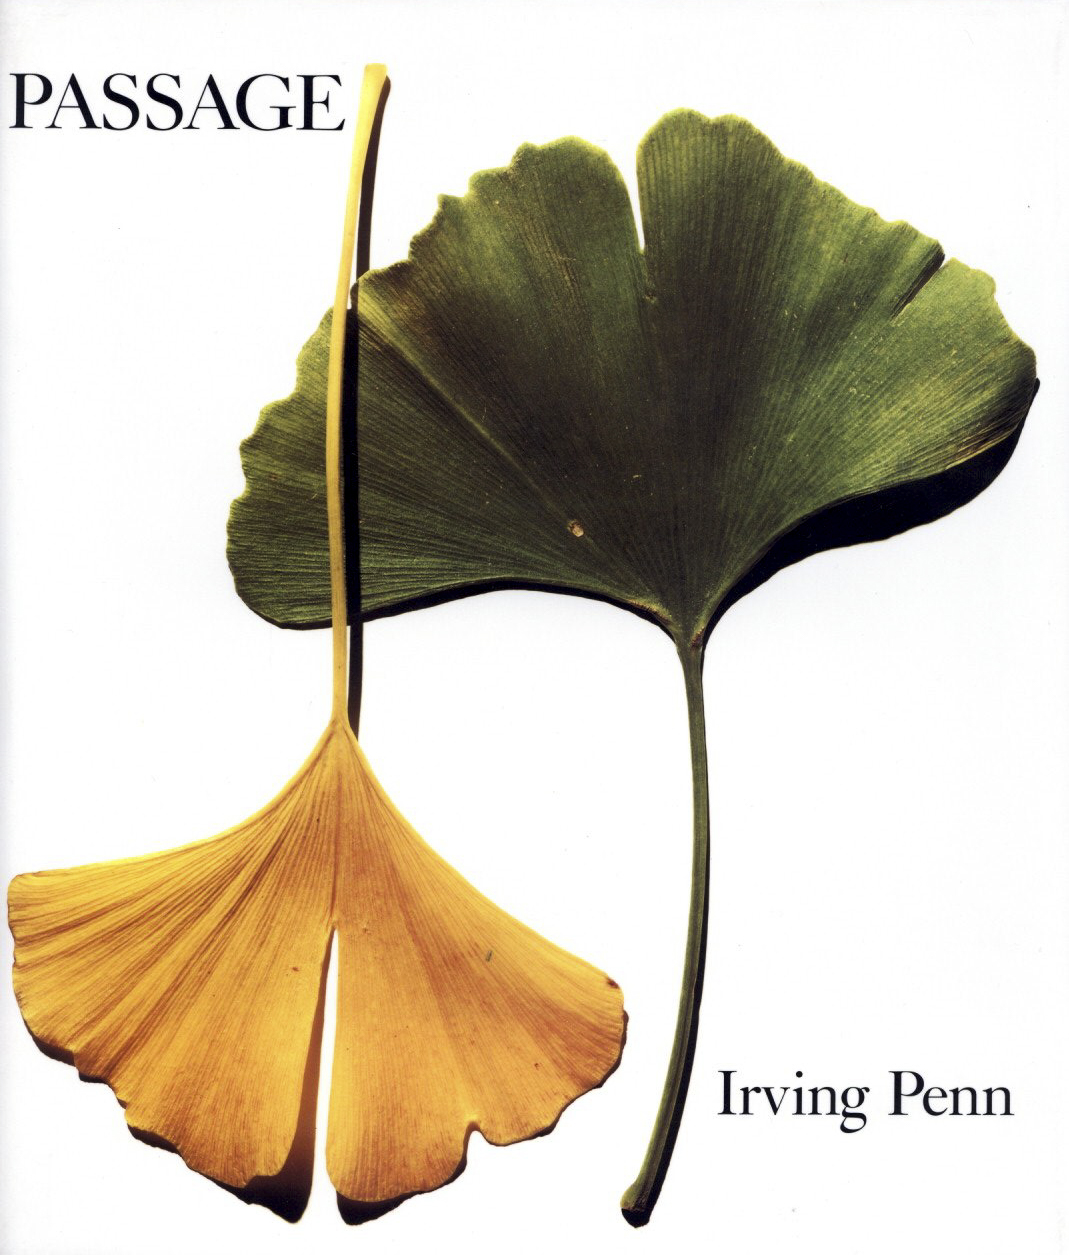 「Passage / Irving Penn」メイン画像